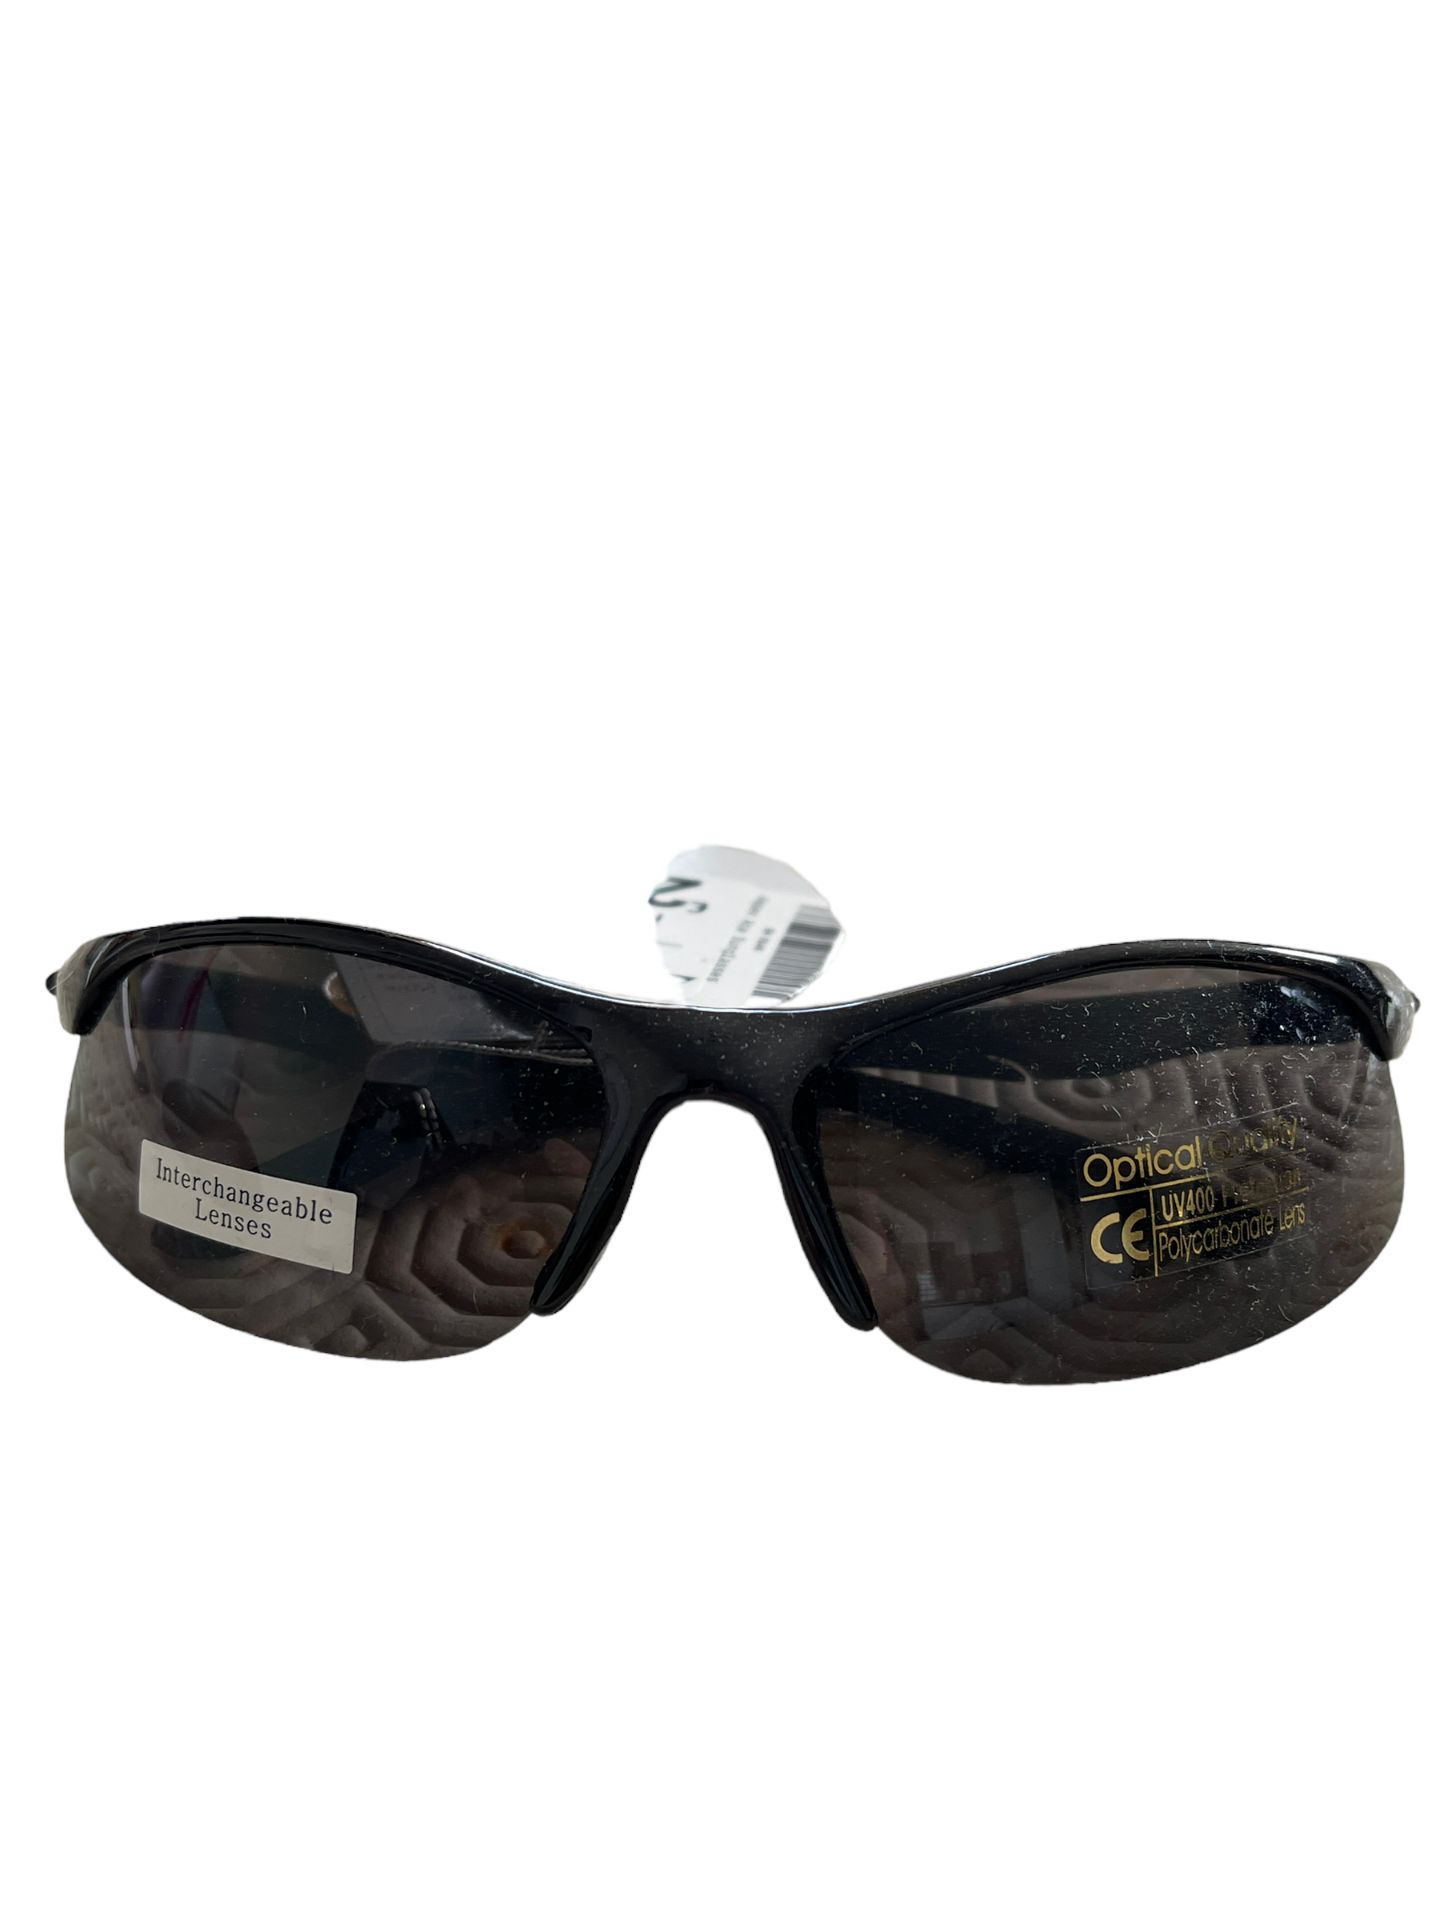 Apex Ace Glasses with case RR£38.00 surplus stock